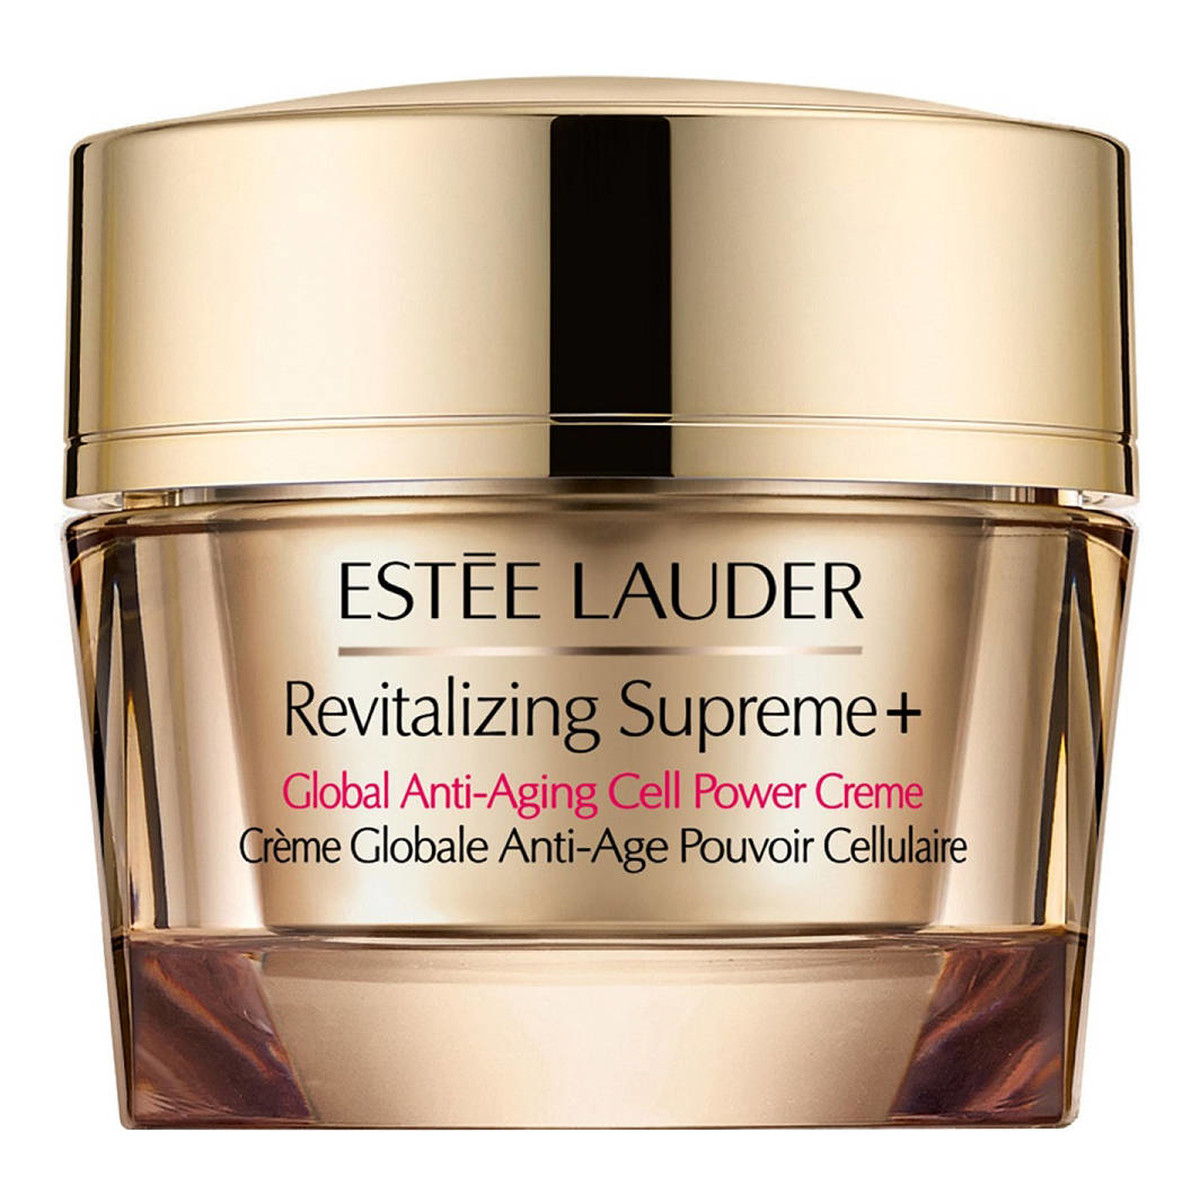 Estee Lauder Revitalizing Supreme+ Global Anti-Aging Cell Power Creme Krem przeciwstarzeniowy 50ml